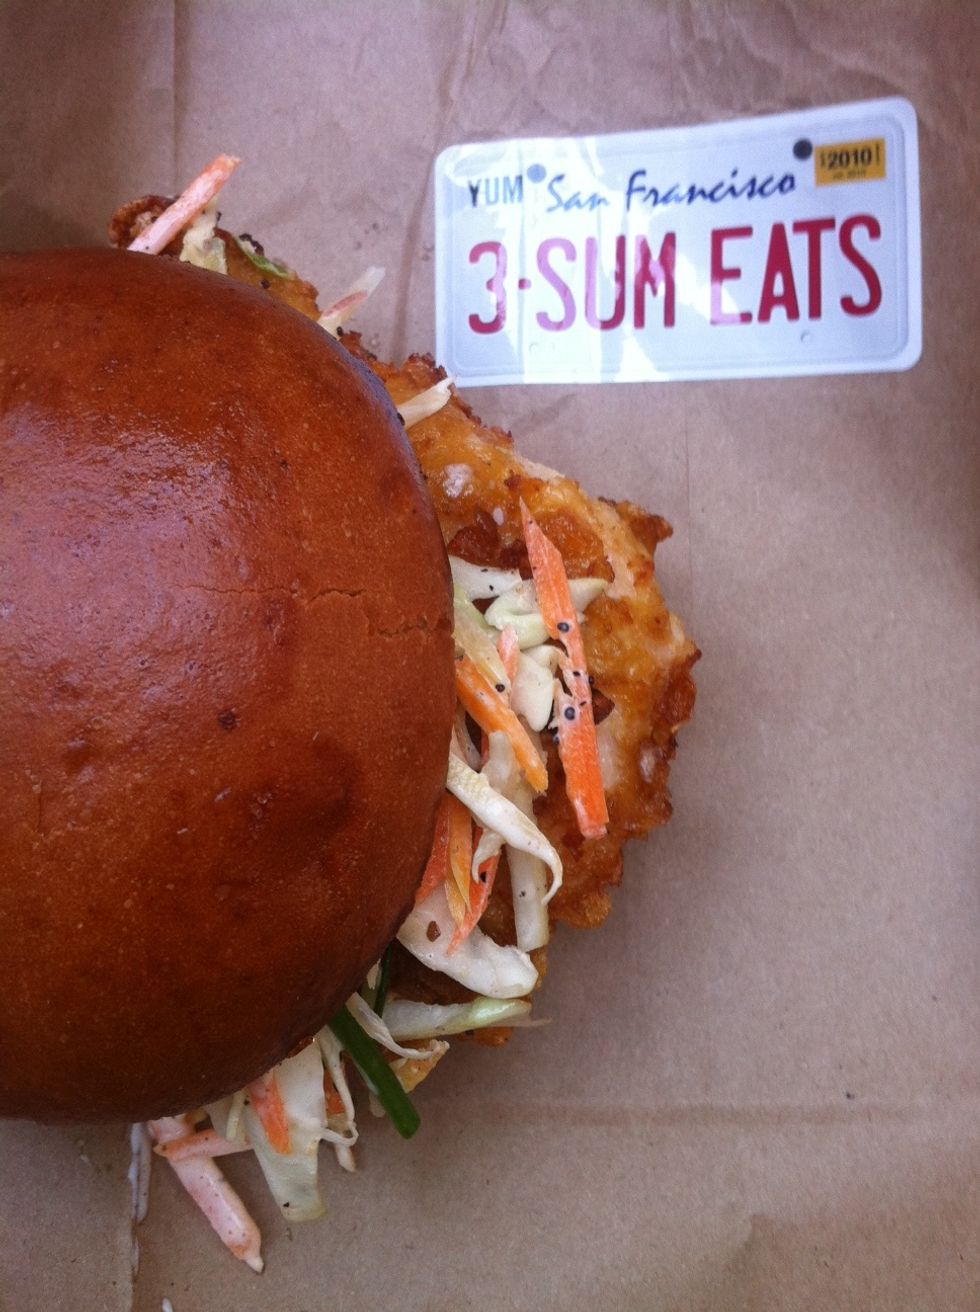 The Fried Chicken Sandwich: Who's Got the Best in SF?